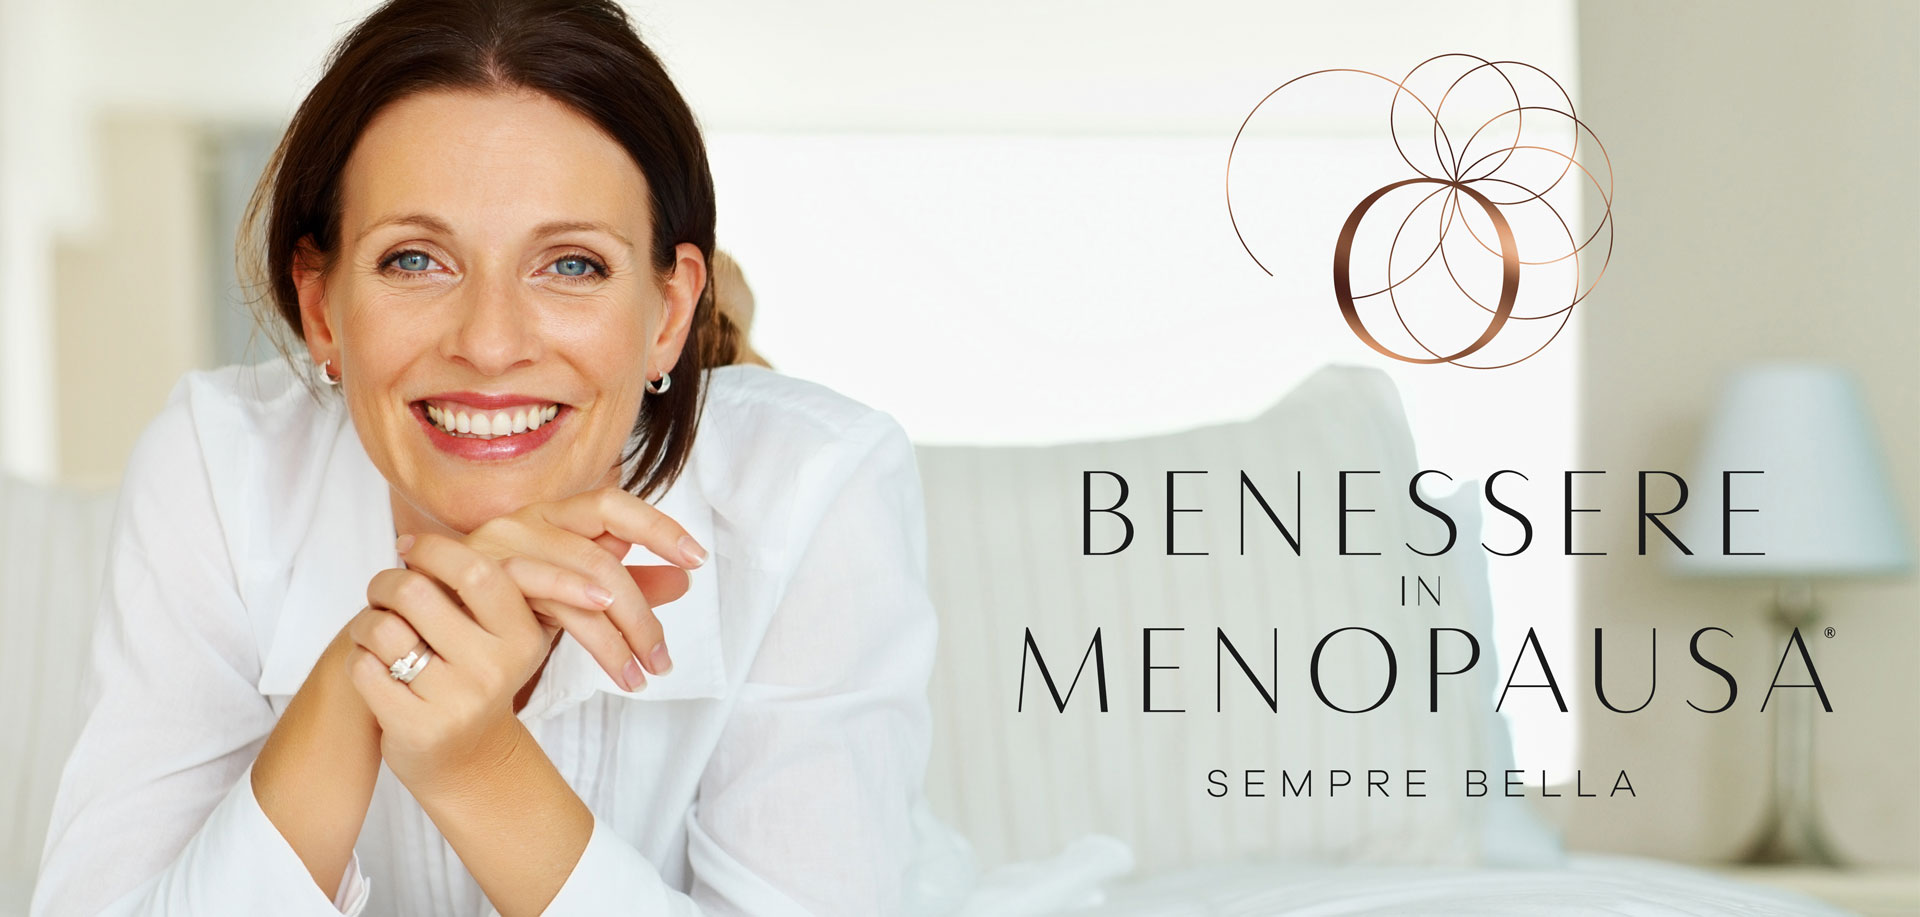 Benessere in menopausa